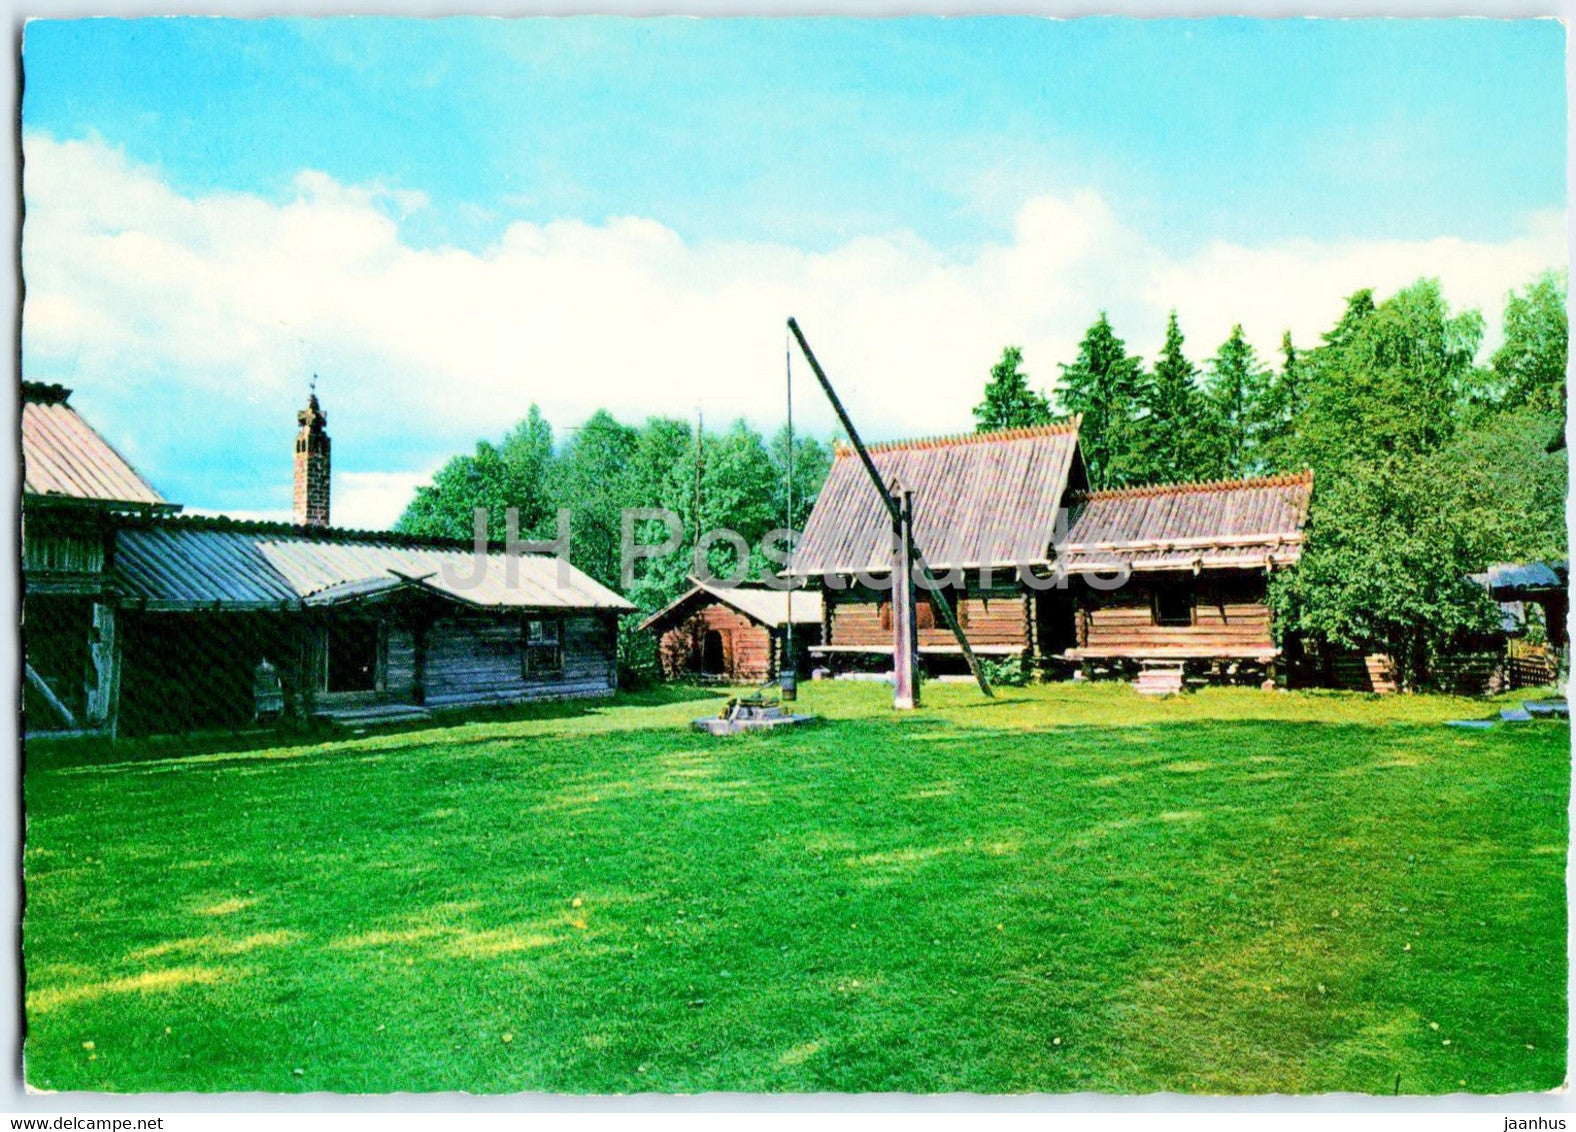 Mora - Zorns Gammelgard - View of the Courtyard - Sweden - unused - JH Postcards